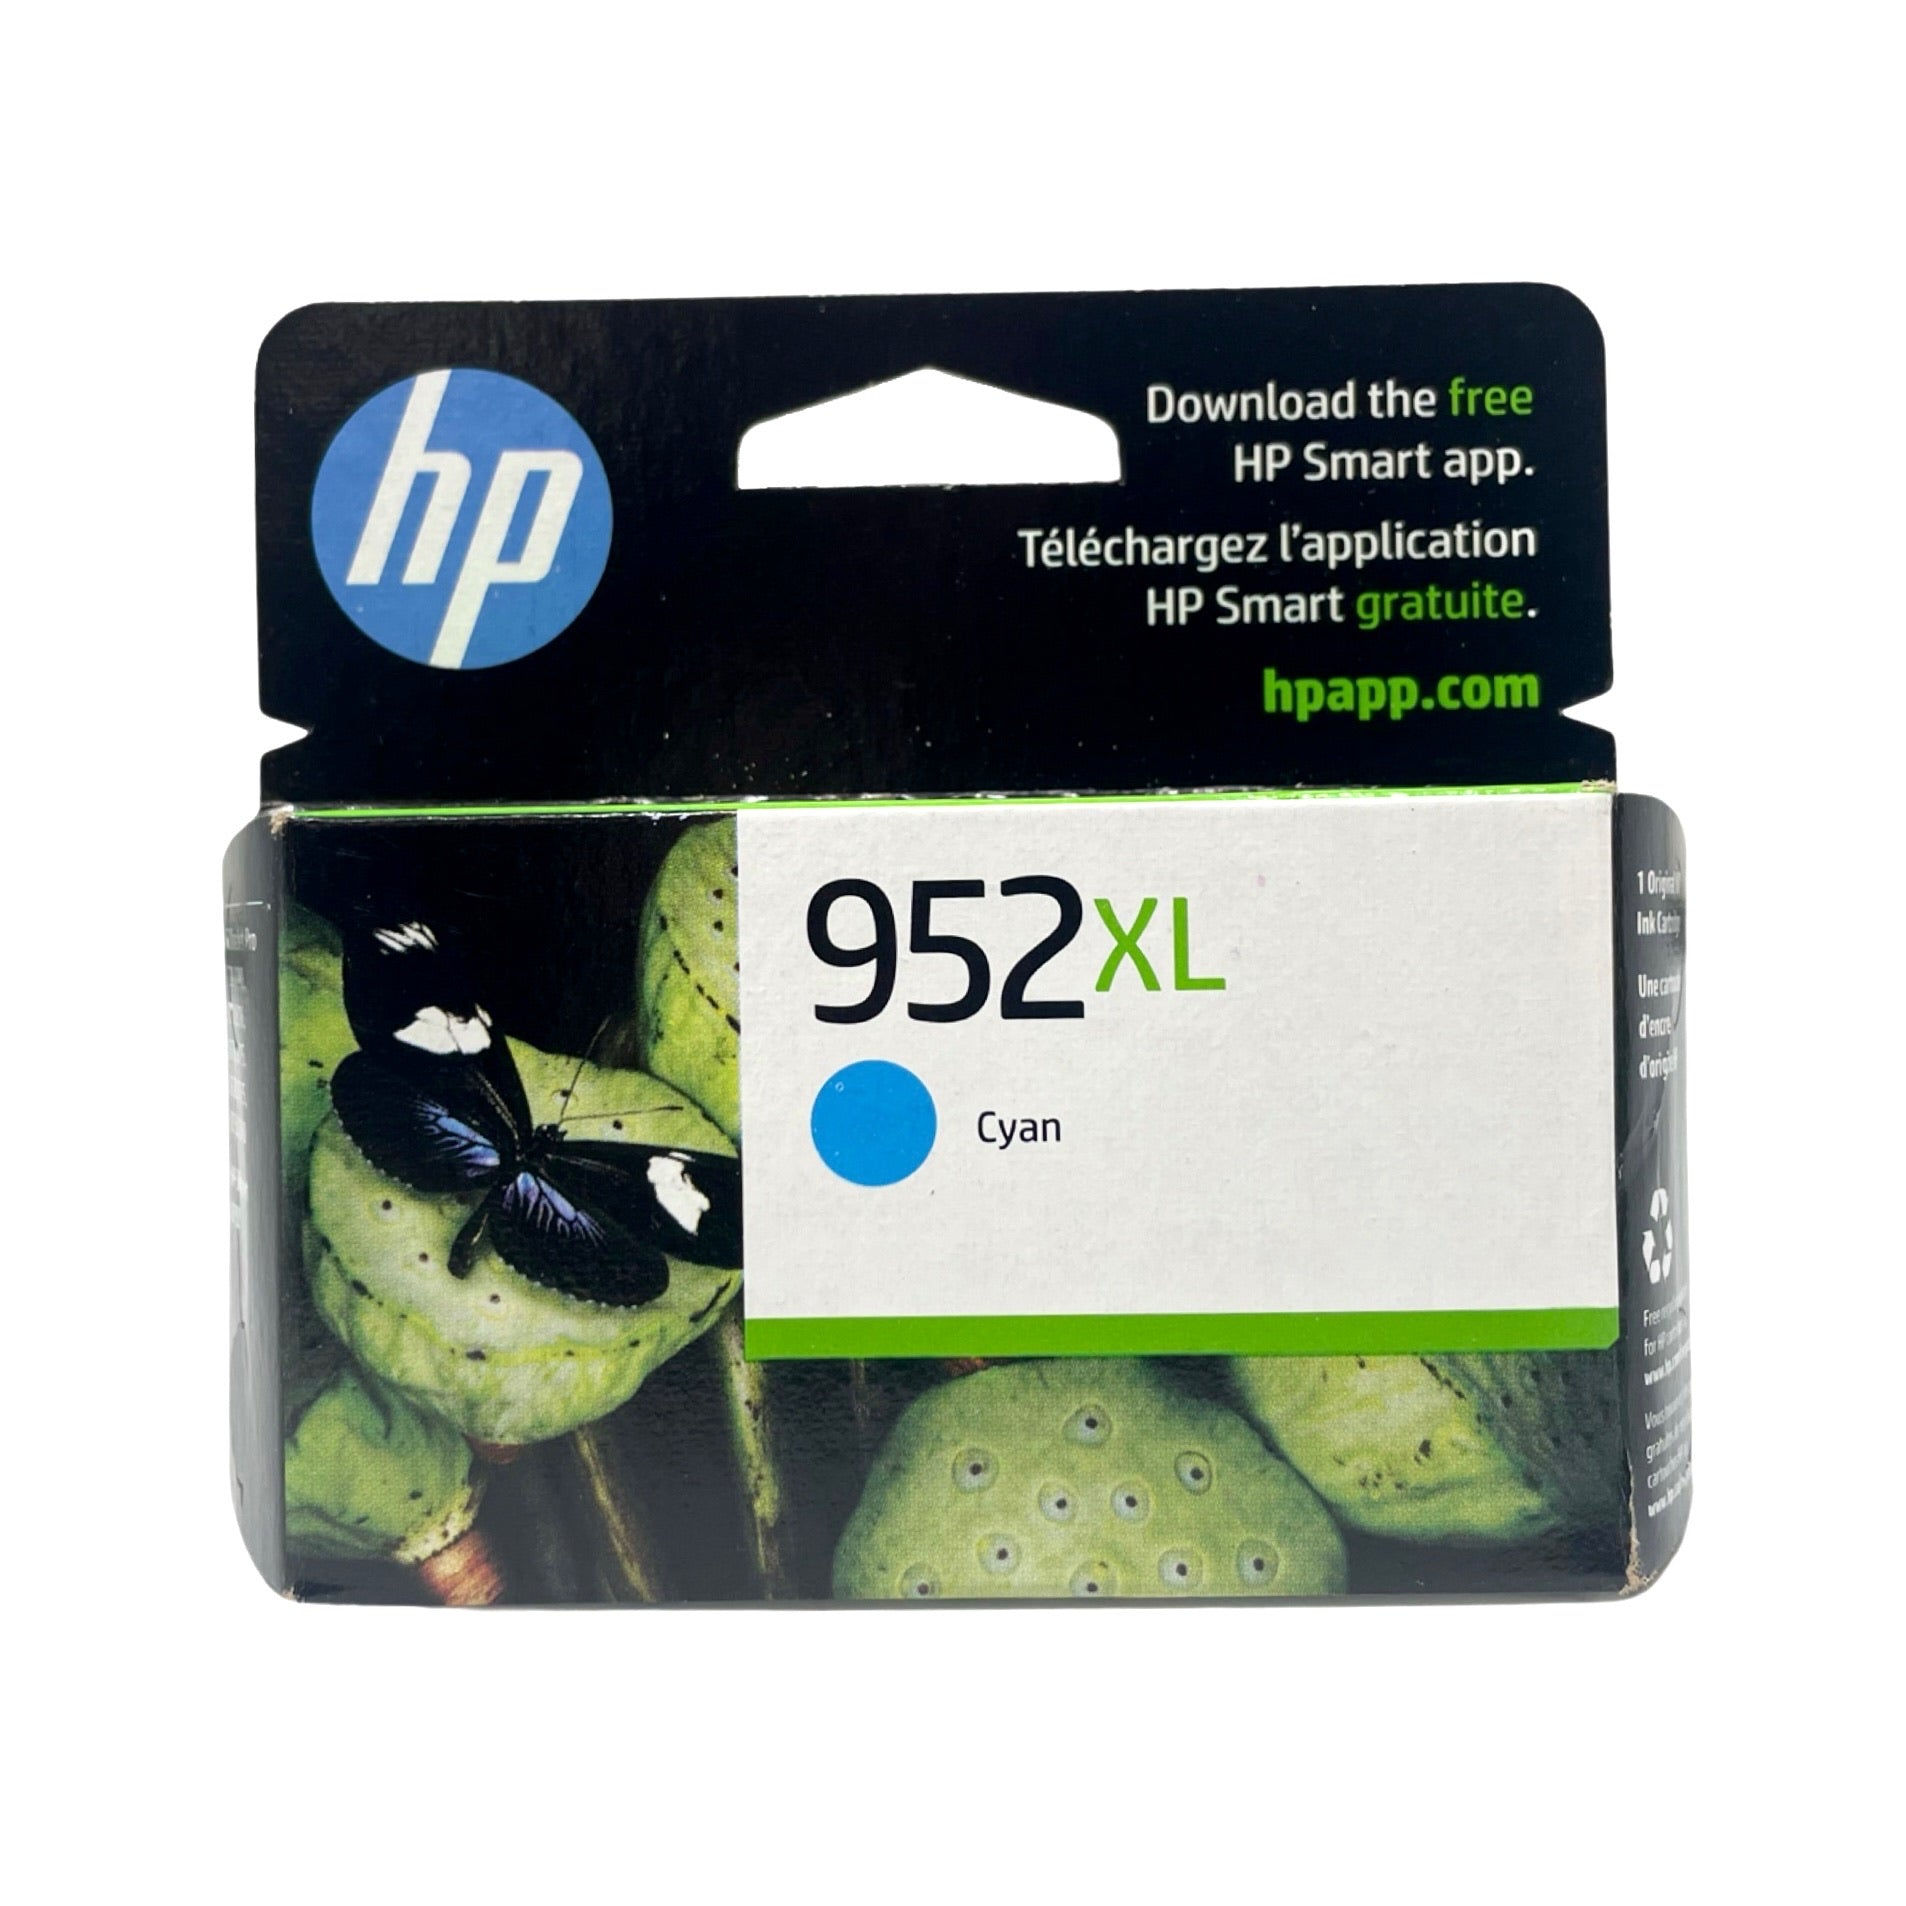 Replacing the Ink Cartridge, HP OfficeJet Pro 8720 Printer